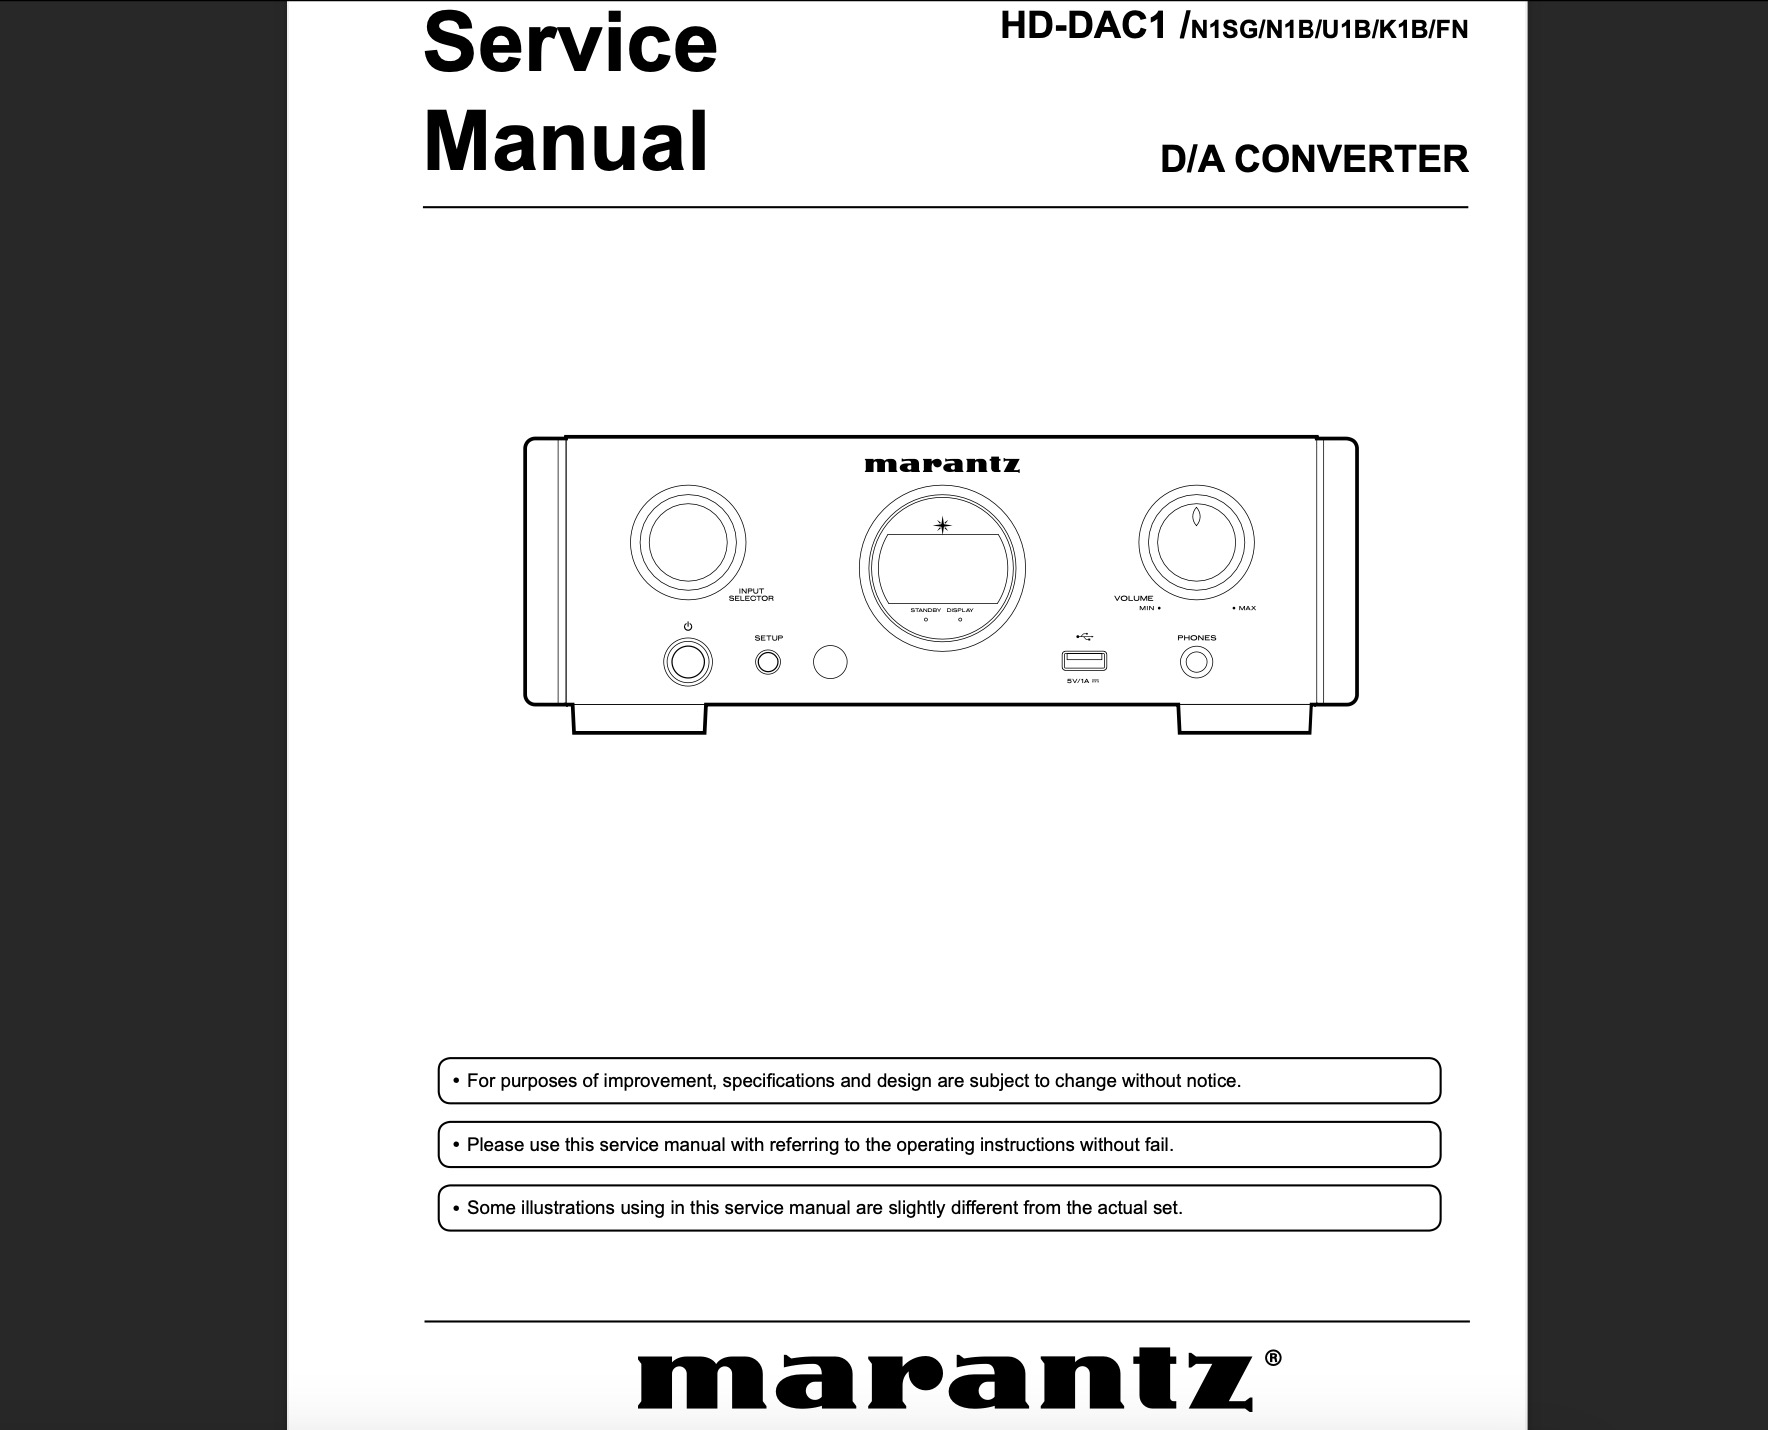 Marantz HD-DAC1 Converter Service Manual, Exploded View and Diagrams